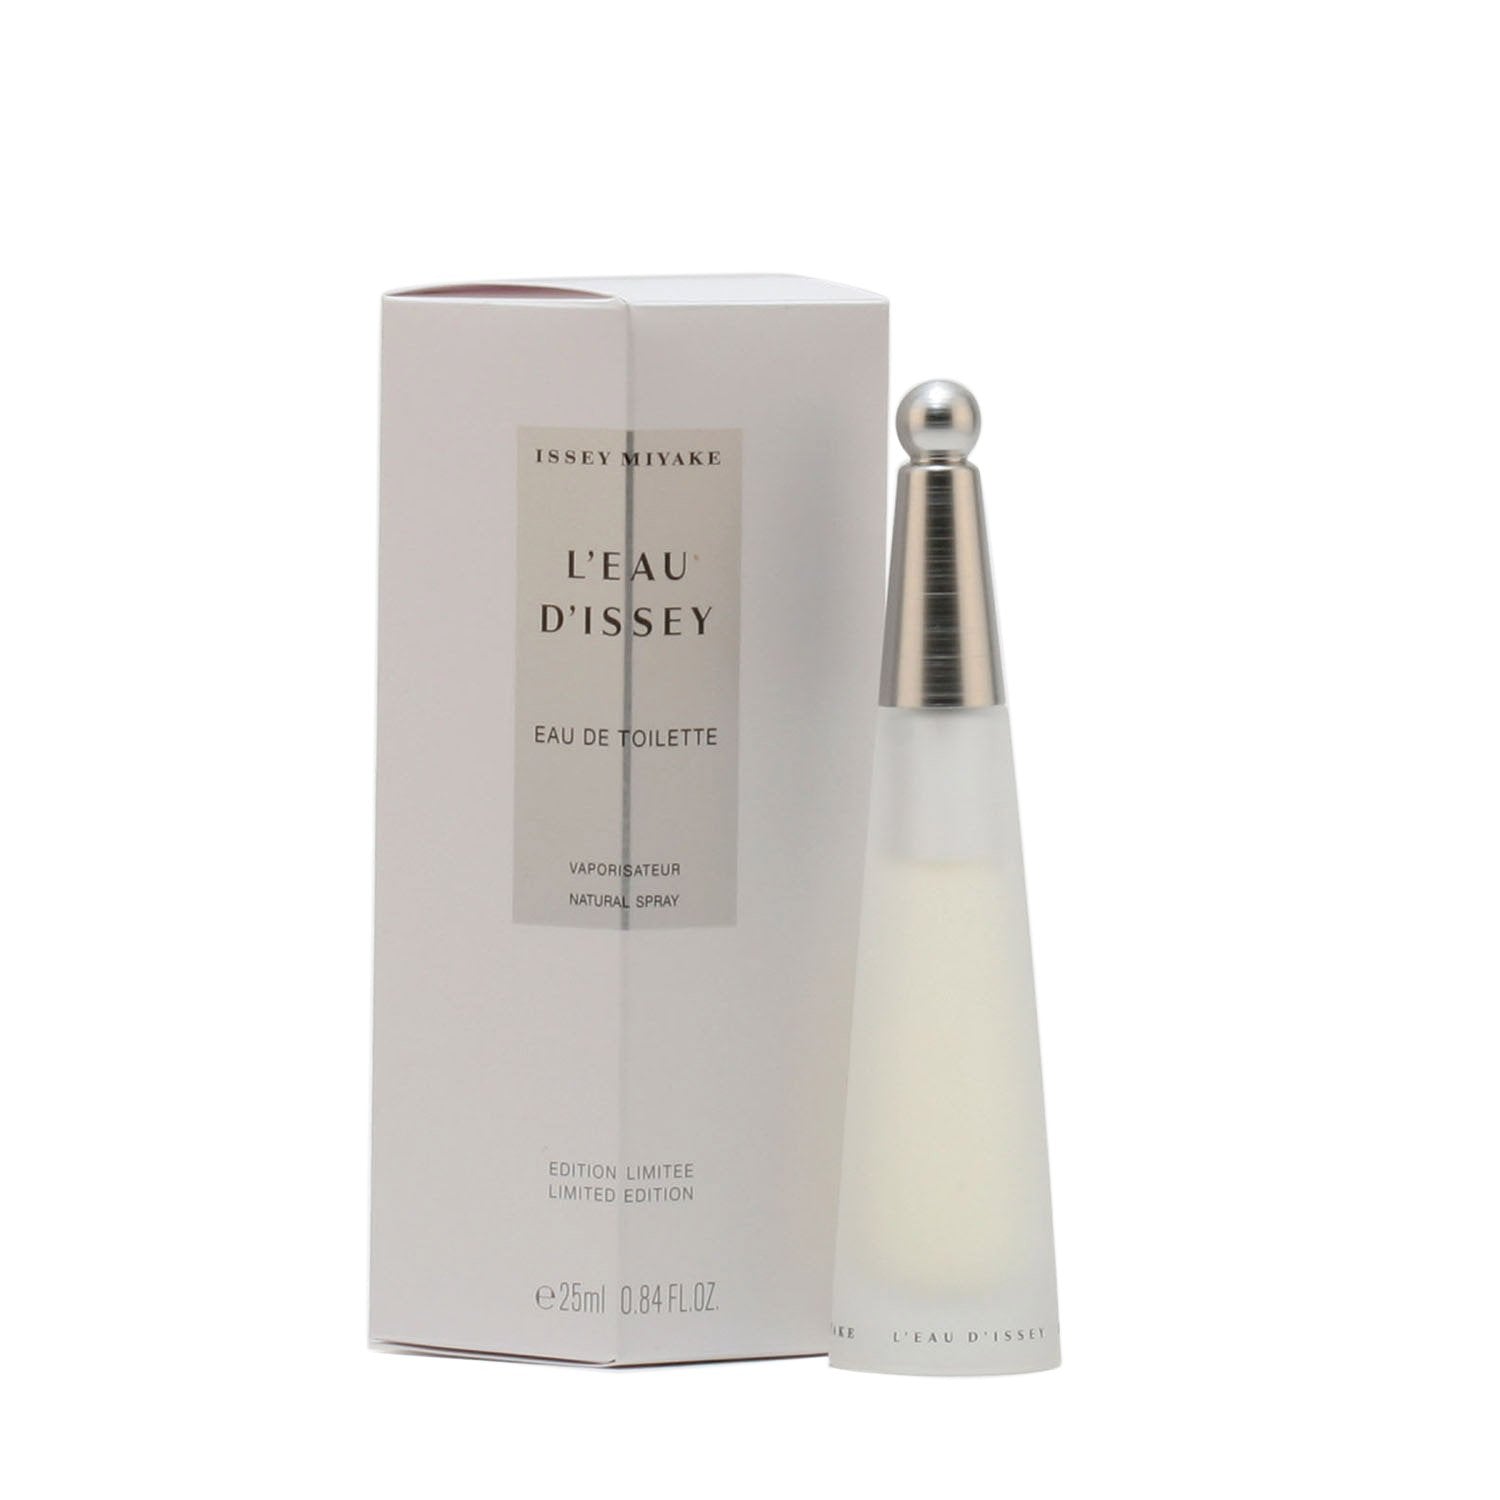 Perfume - LEAU D'ISSEY MIYAKE FOR WOMEN - EAU DE TOILETTE SPRAY, 0.85 OZ